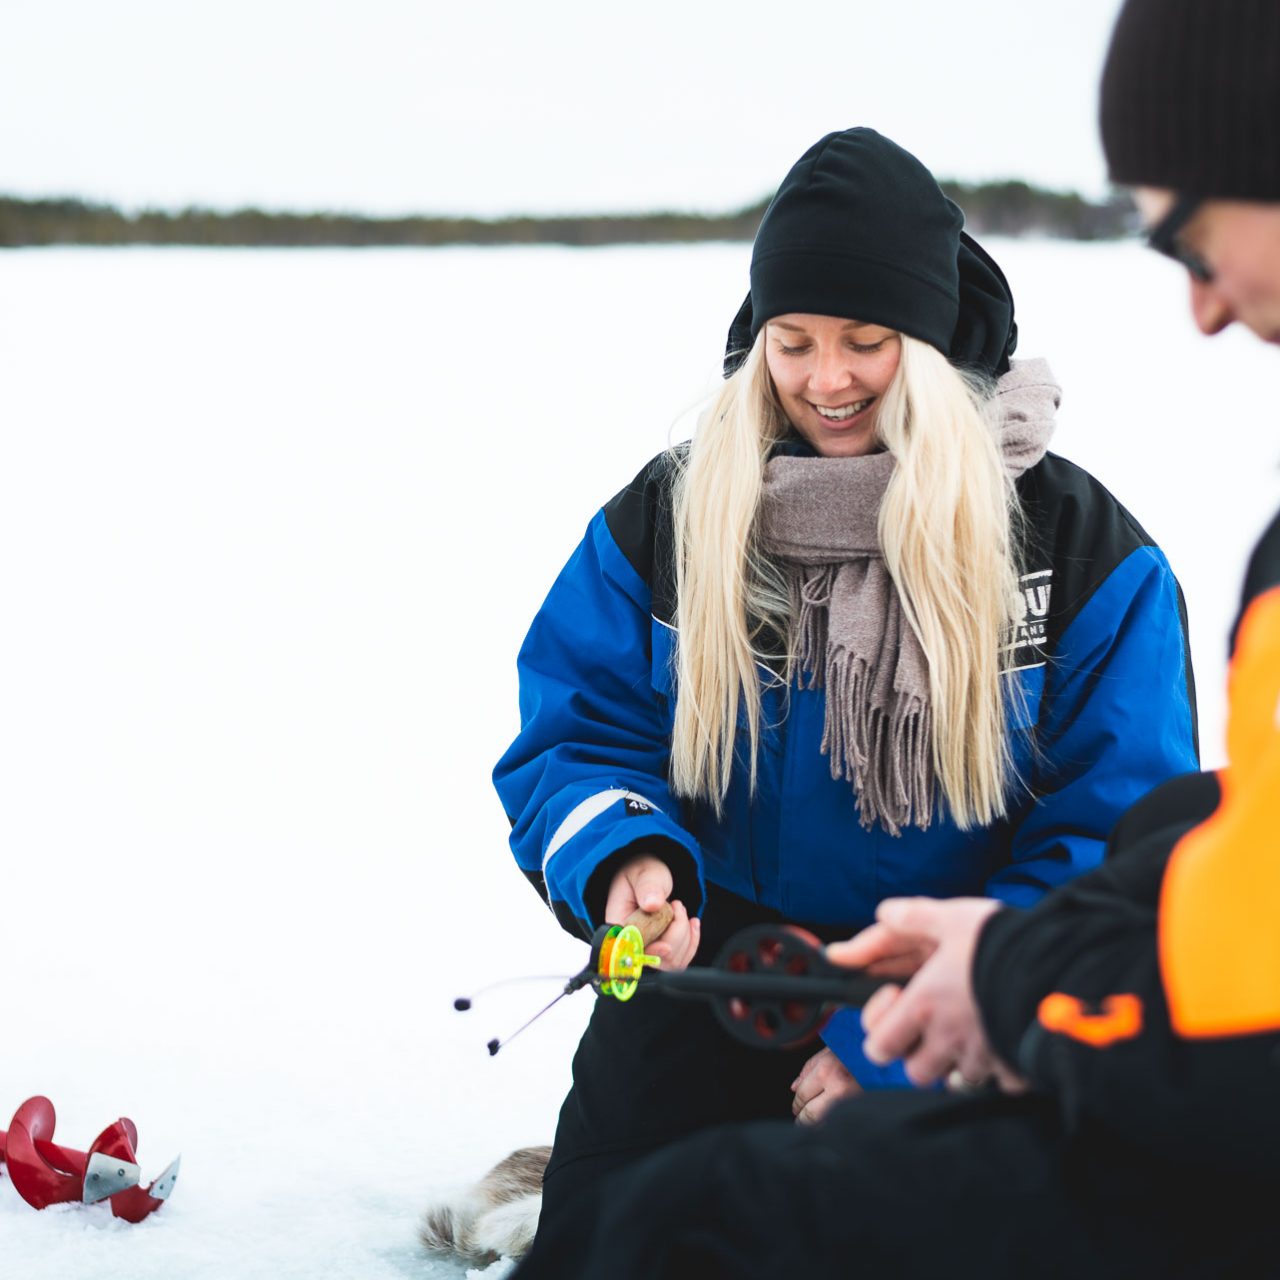 Snowmobile Safari with Ice Fishing Experience, Rovaniemi / Arctic Circle Wilderness Resort, Villi Pohjola / Wild Nordic Finland @wildnordicfinland.